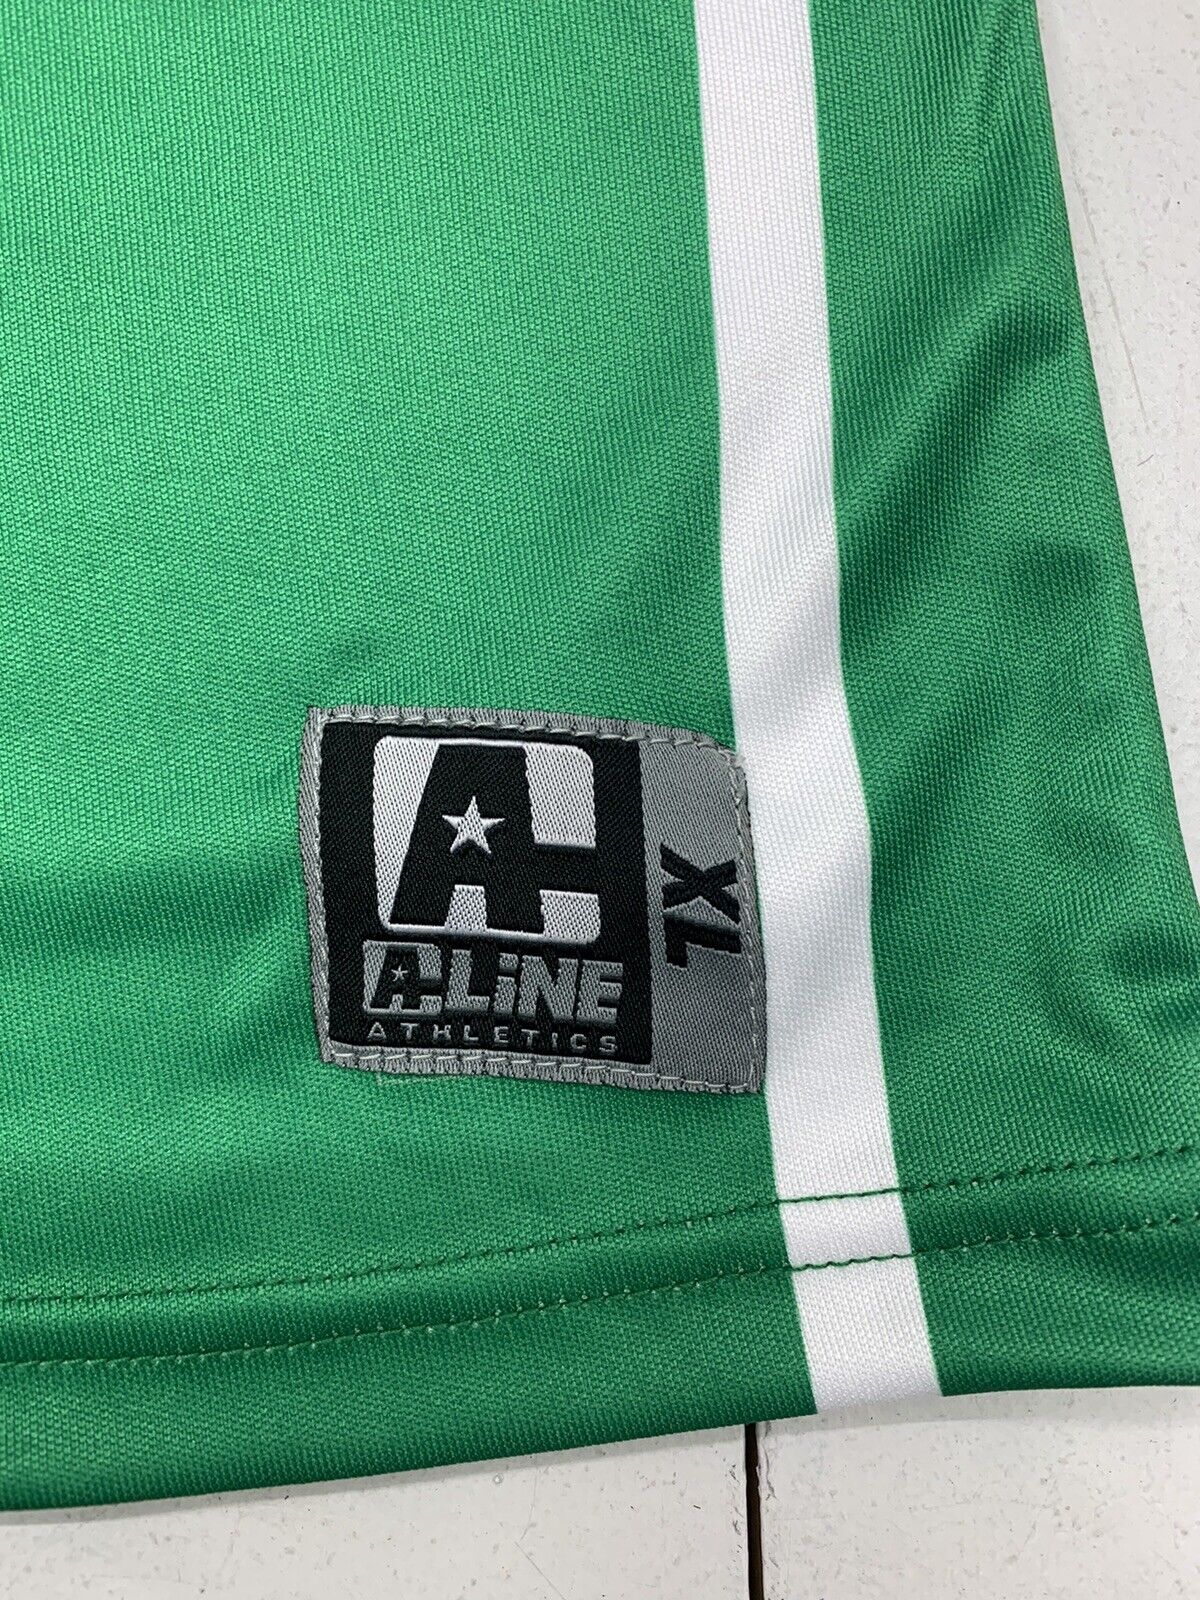 athletics green jersey